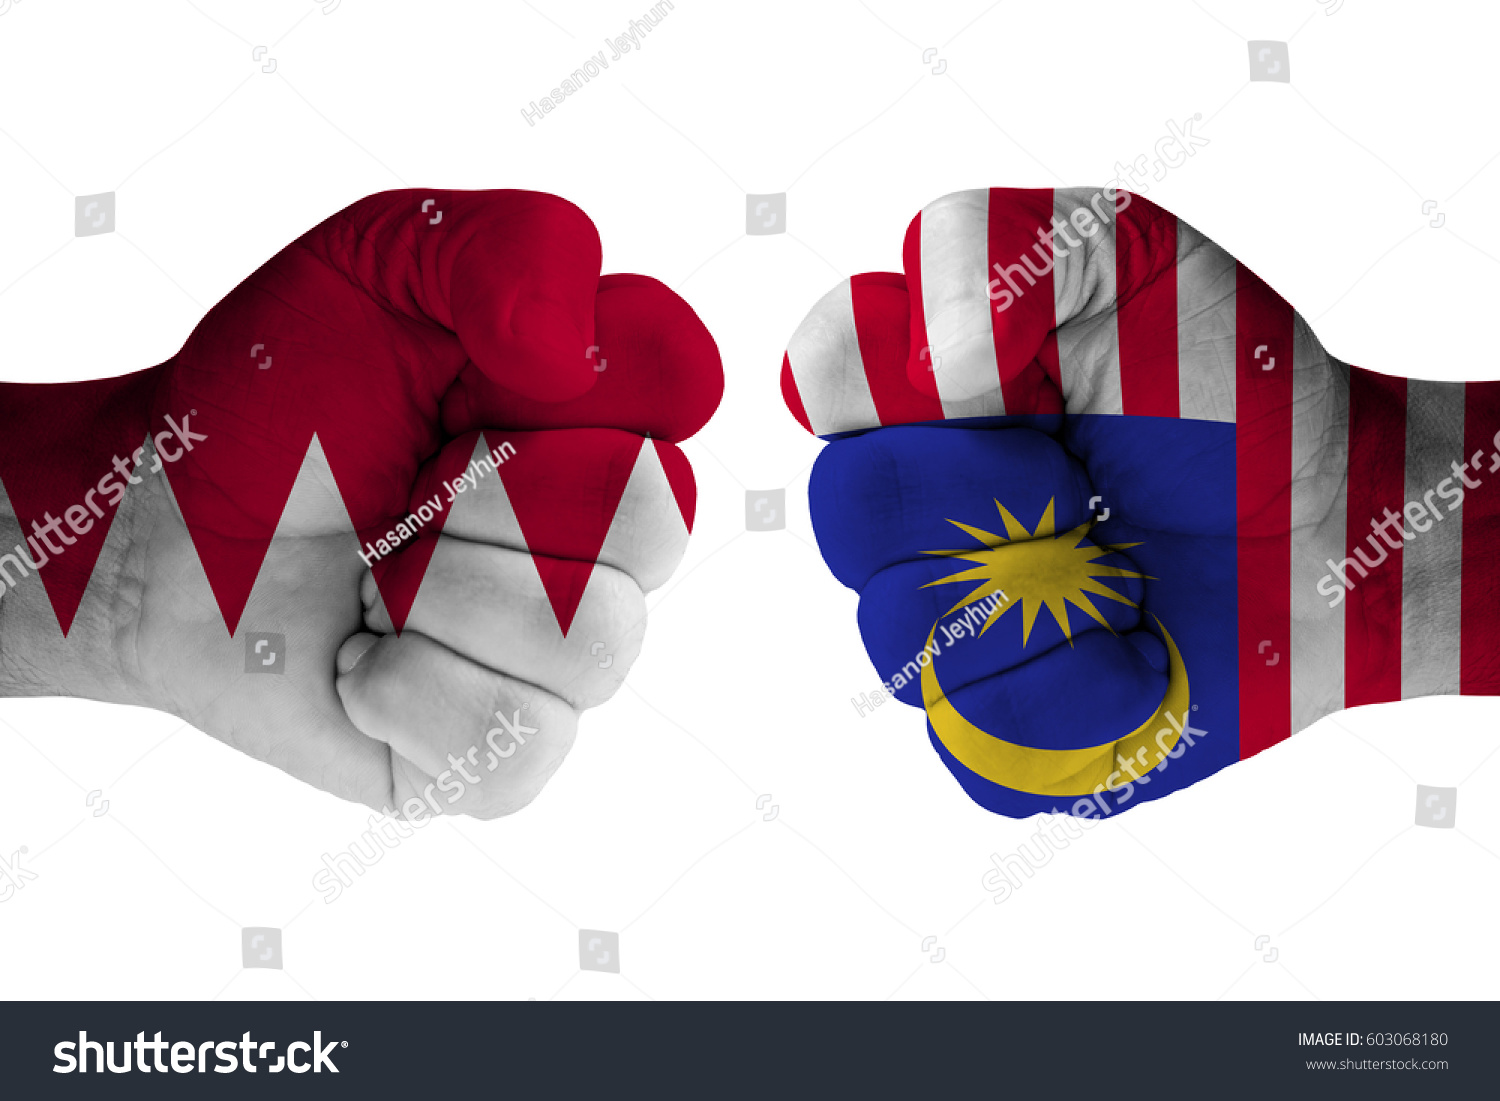 Malaysia bahrain